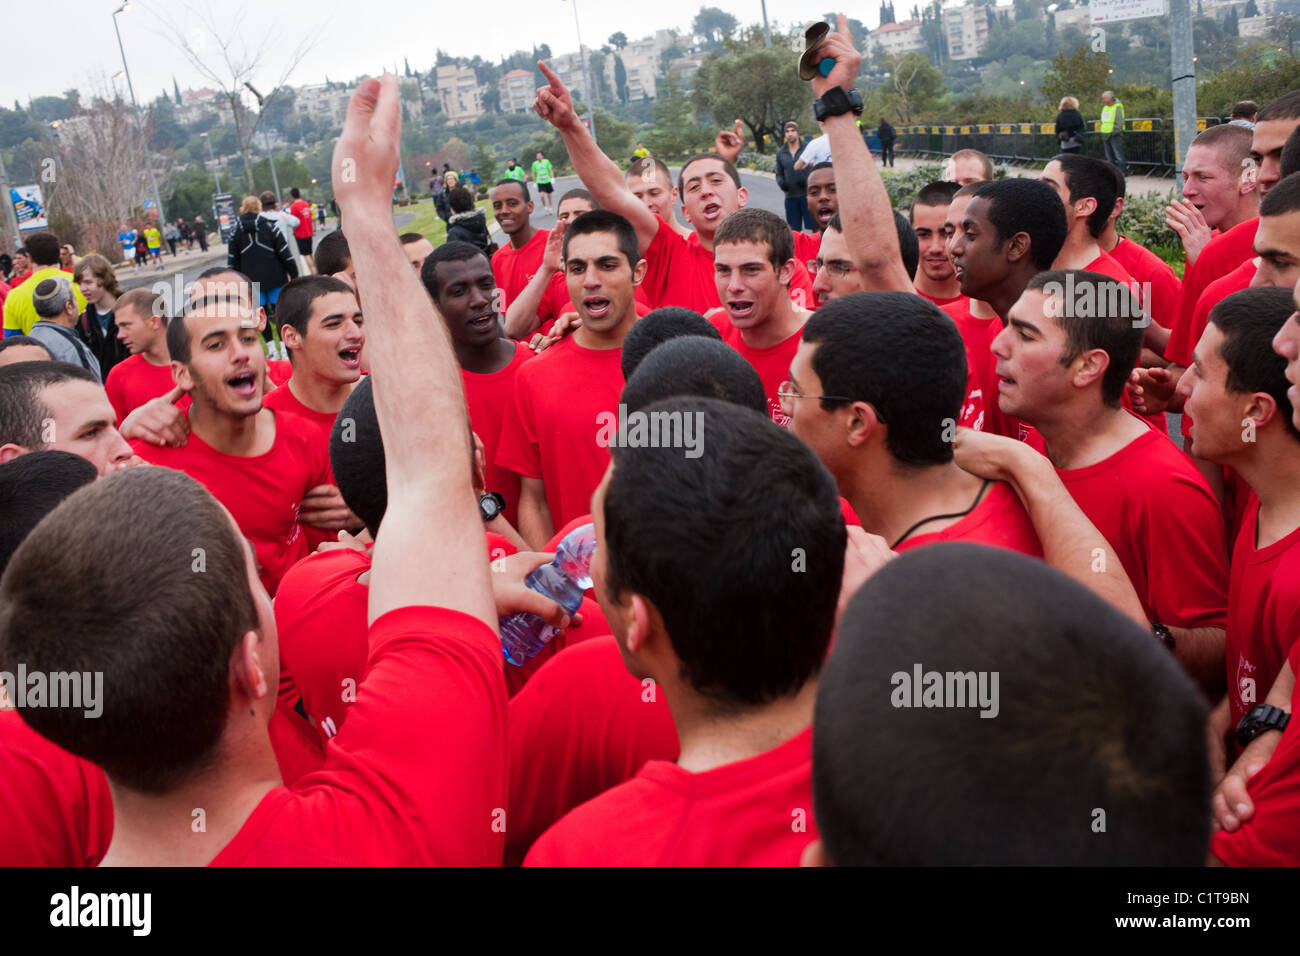 First Jerusalem International Full-Marathon that took place today with 10,000 participants. Jerusalem, Israel. 25/03/2011. Stock Photo